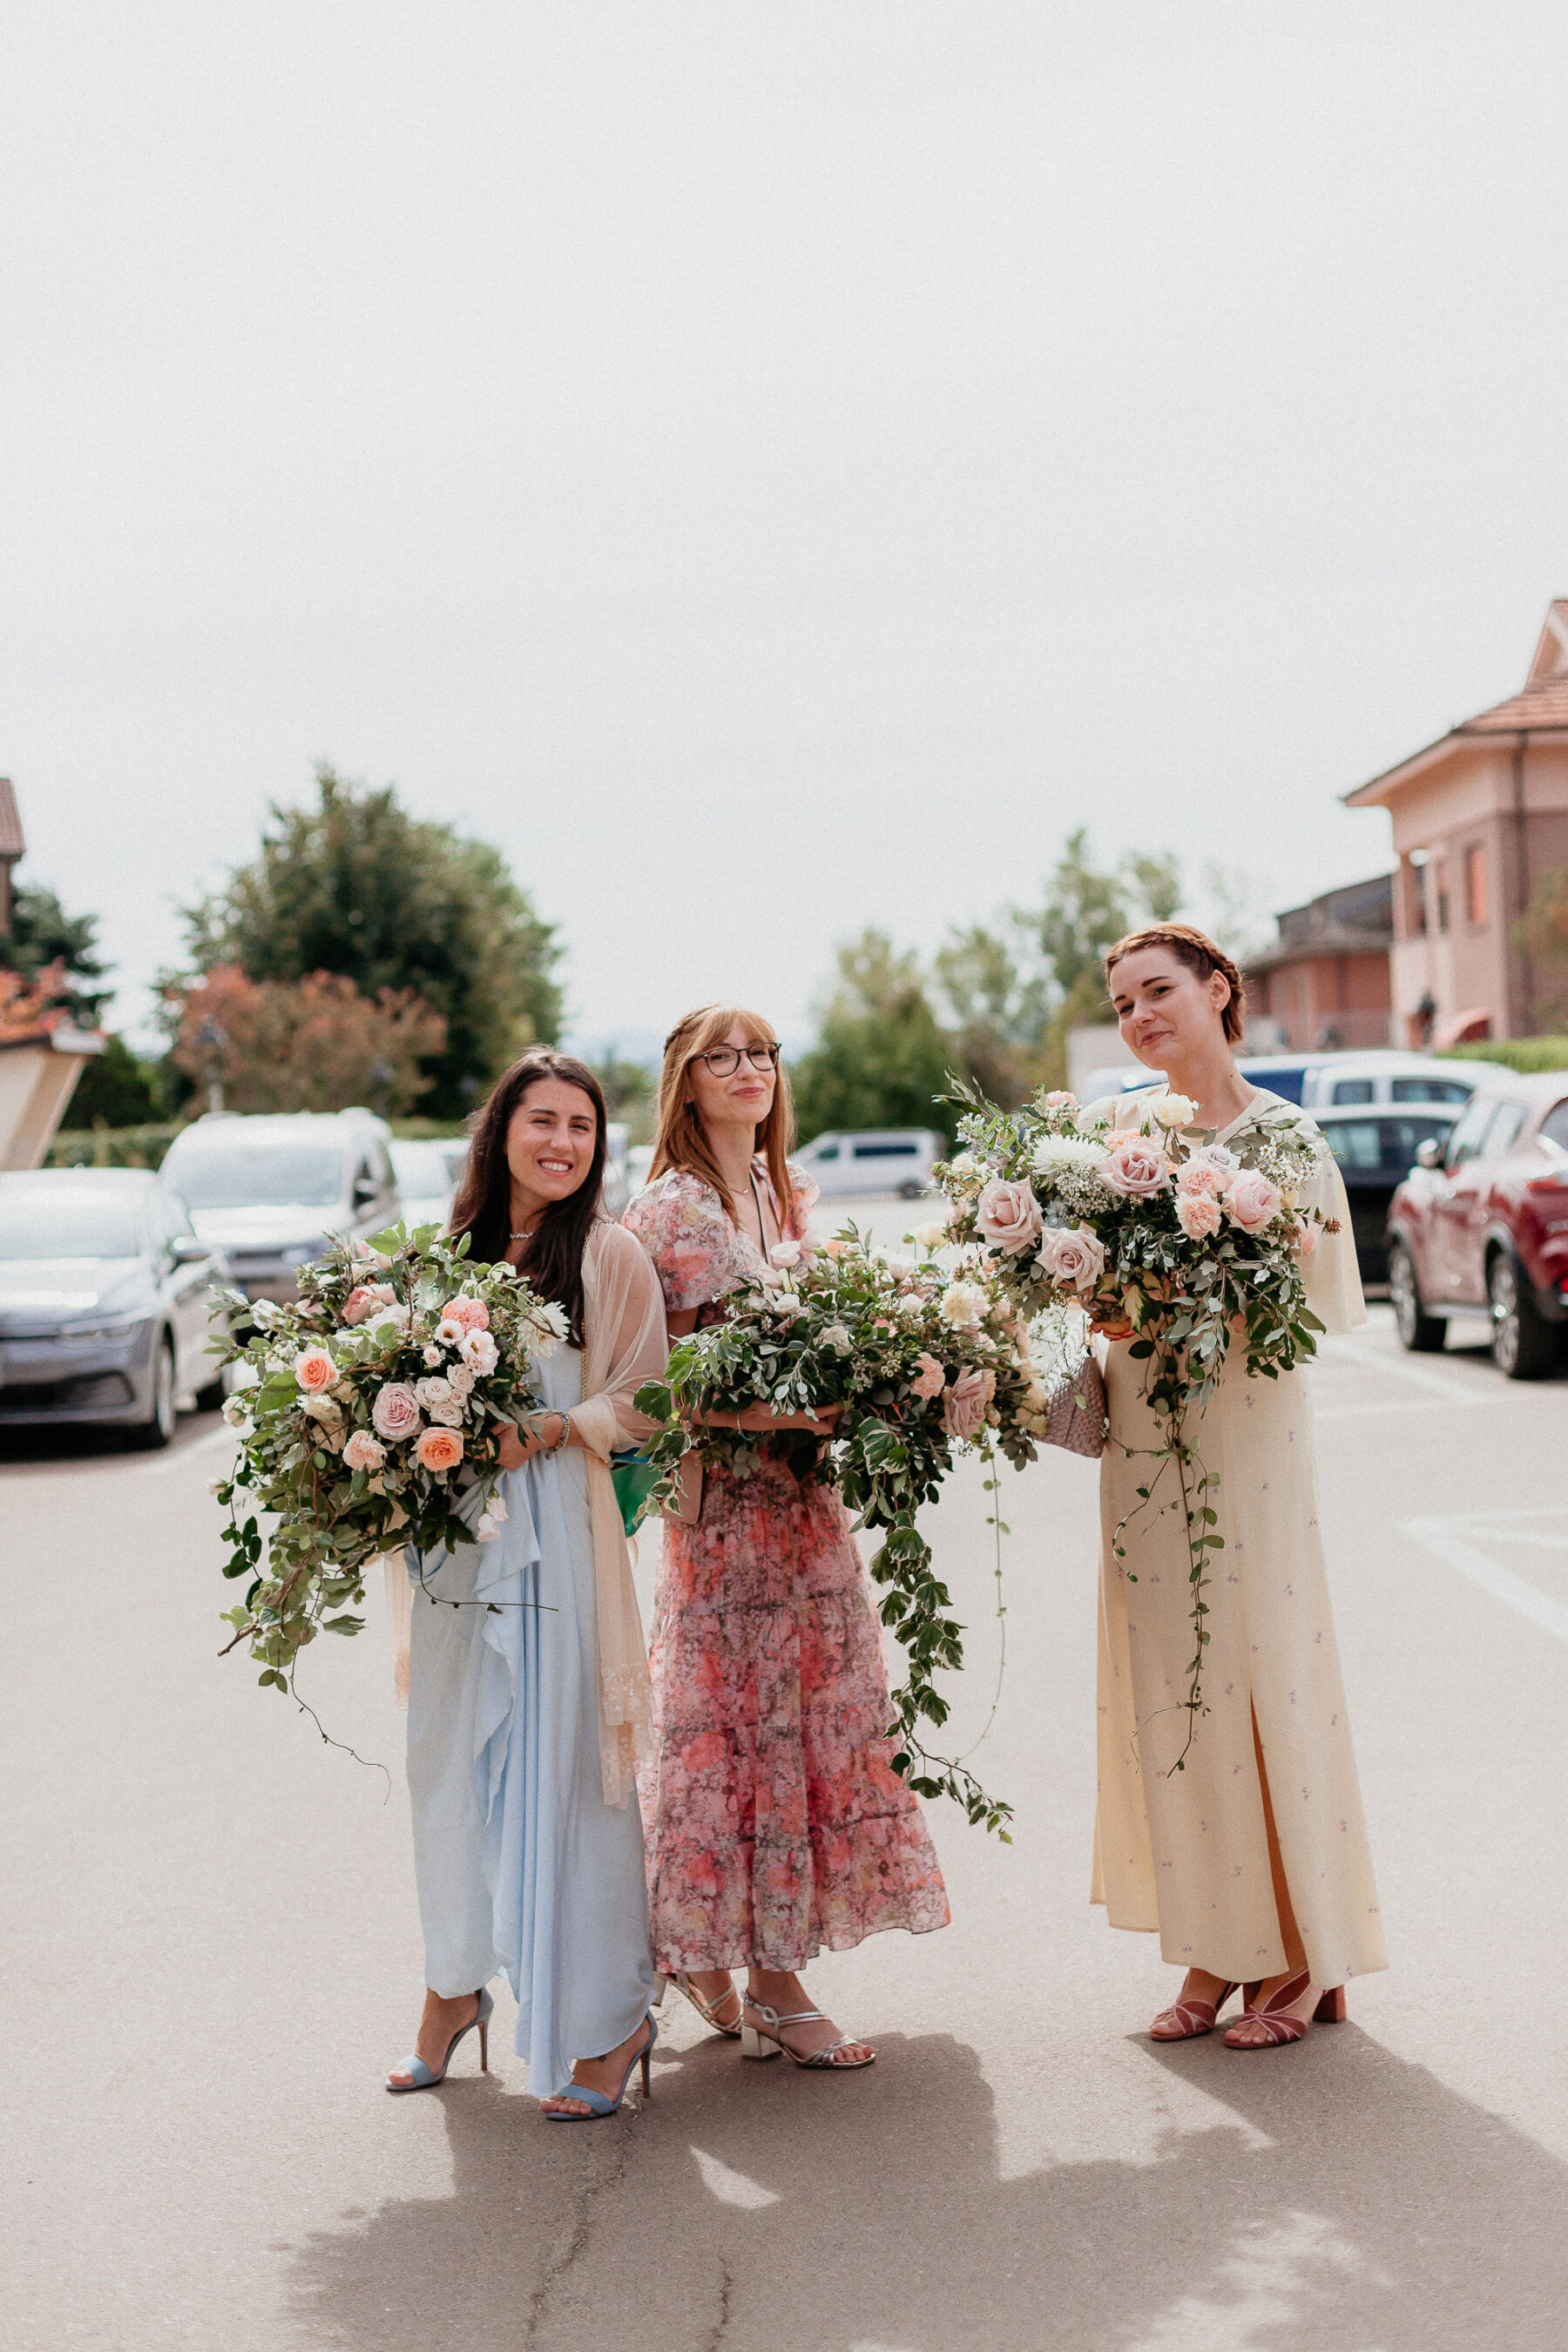 Bridesmaids holding large wedding bouquets.